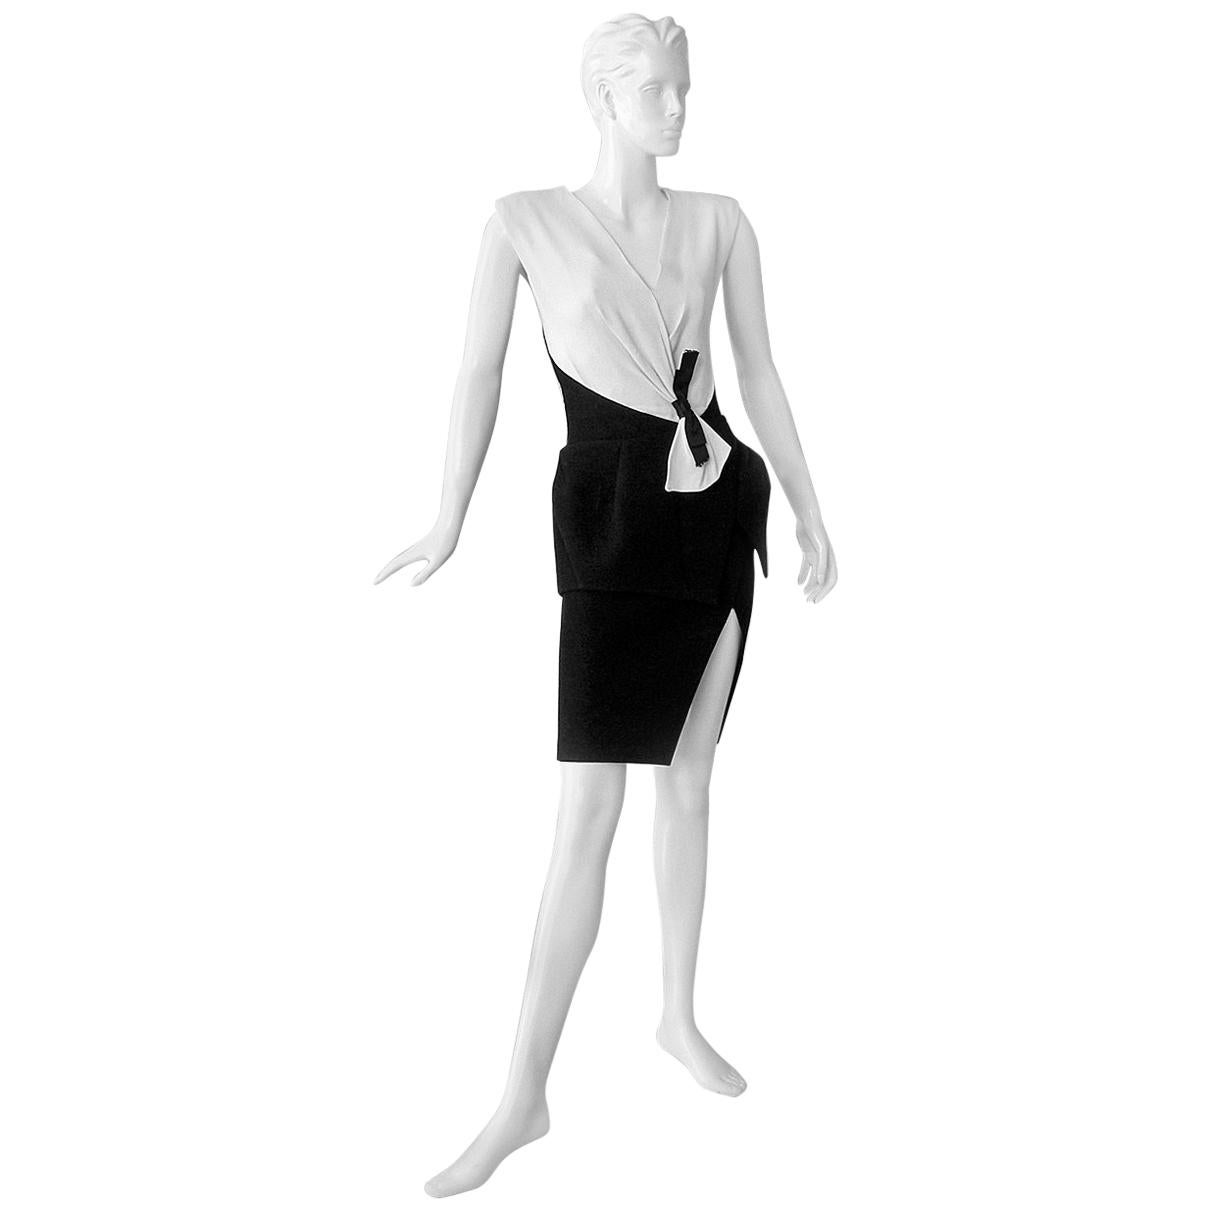 NWT Balenciaga Runway Scuba Dress Lots of Leg -Highly Coveted sz 38